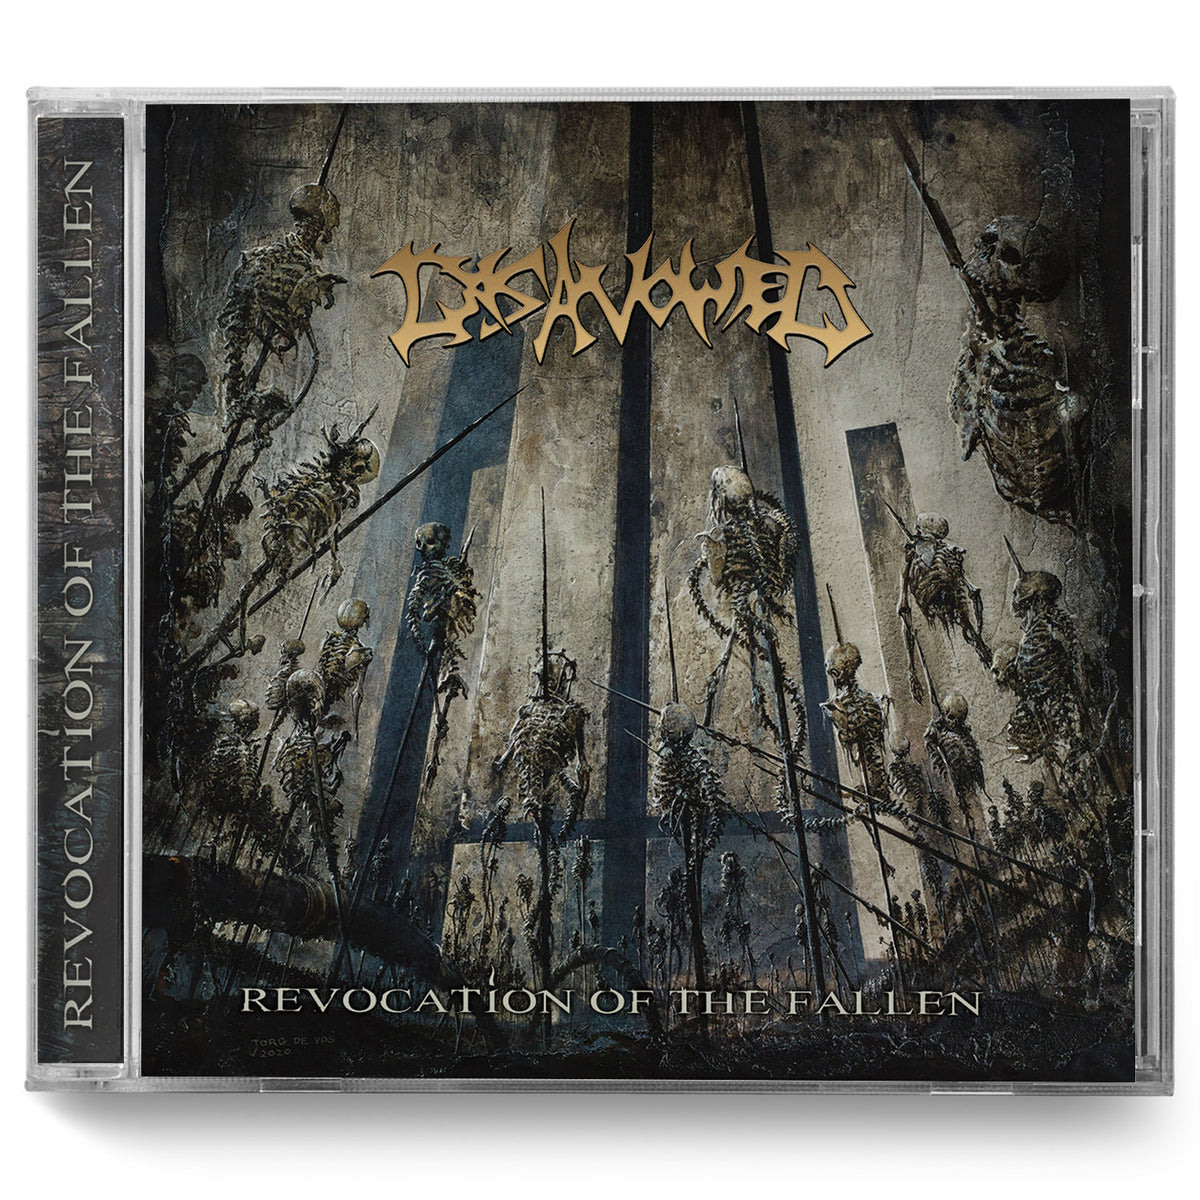 Disavowed "Revocation of the Fallen" CD - Miasma Records